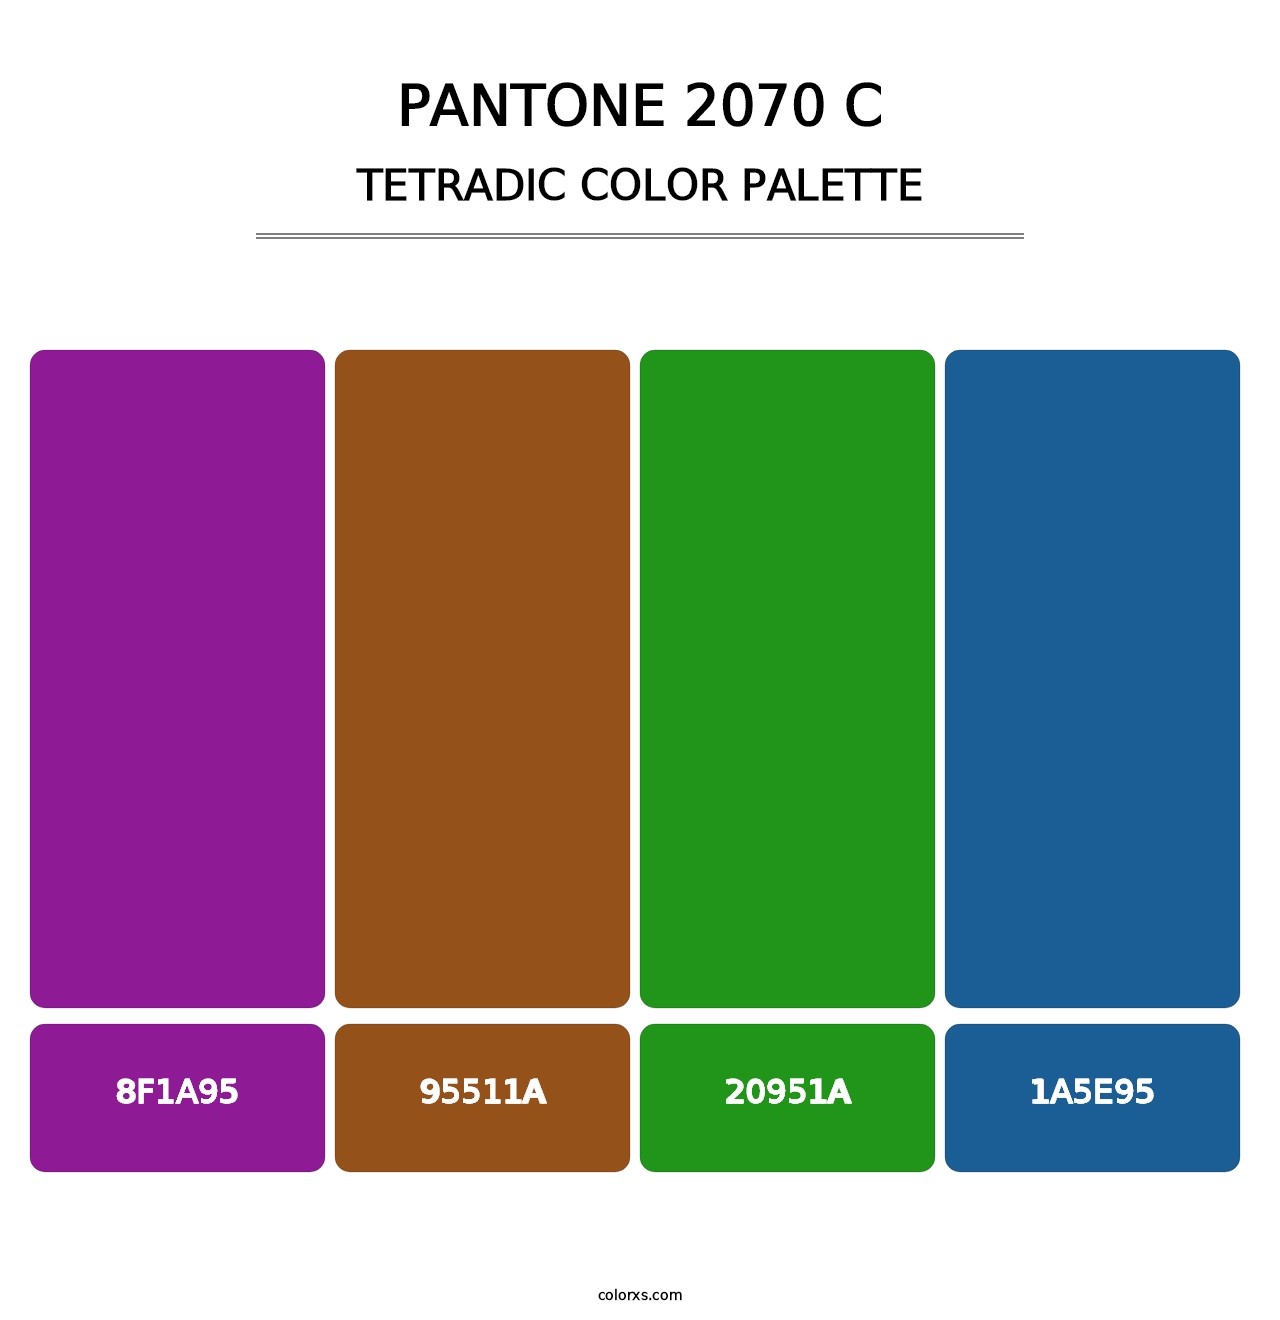 PANTONE 2070 C - Tetradic Color Palette